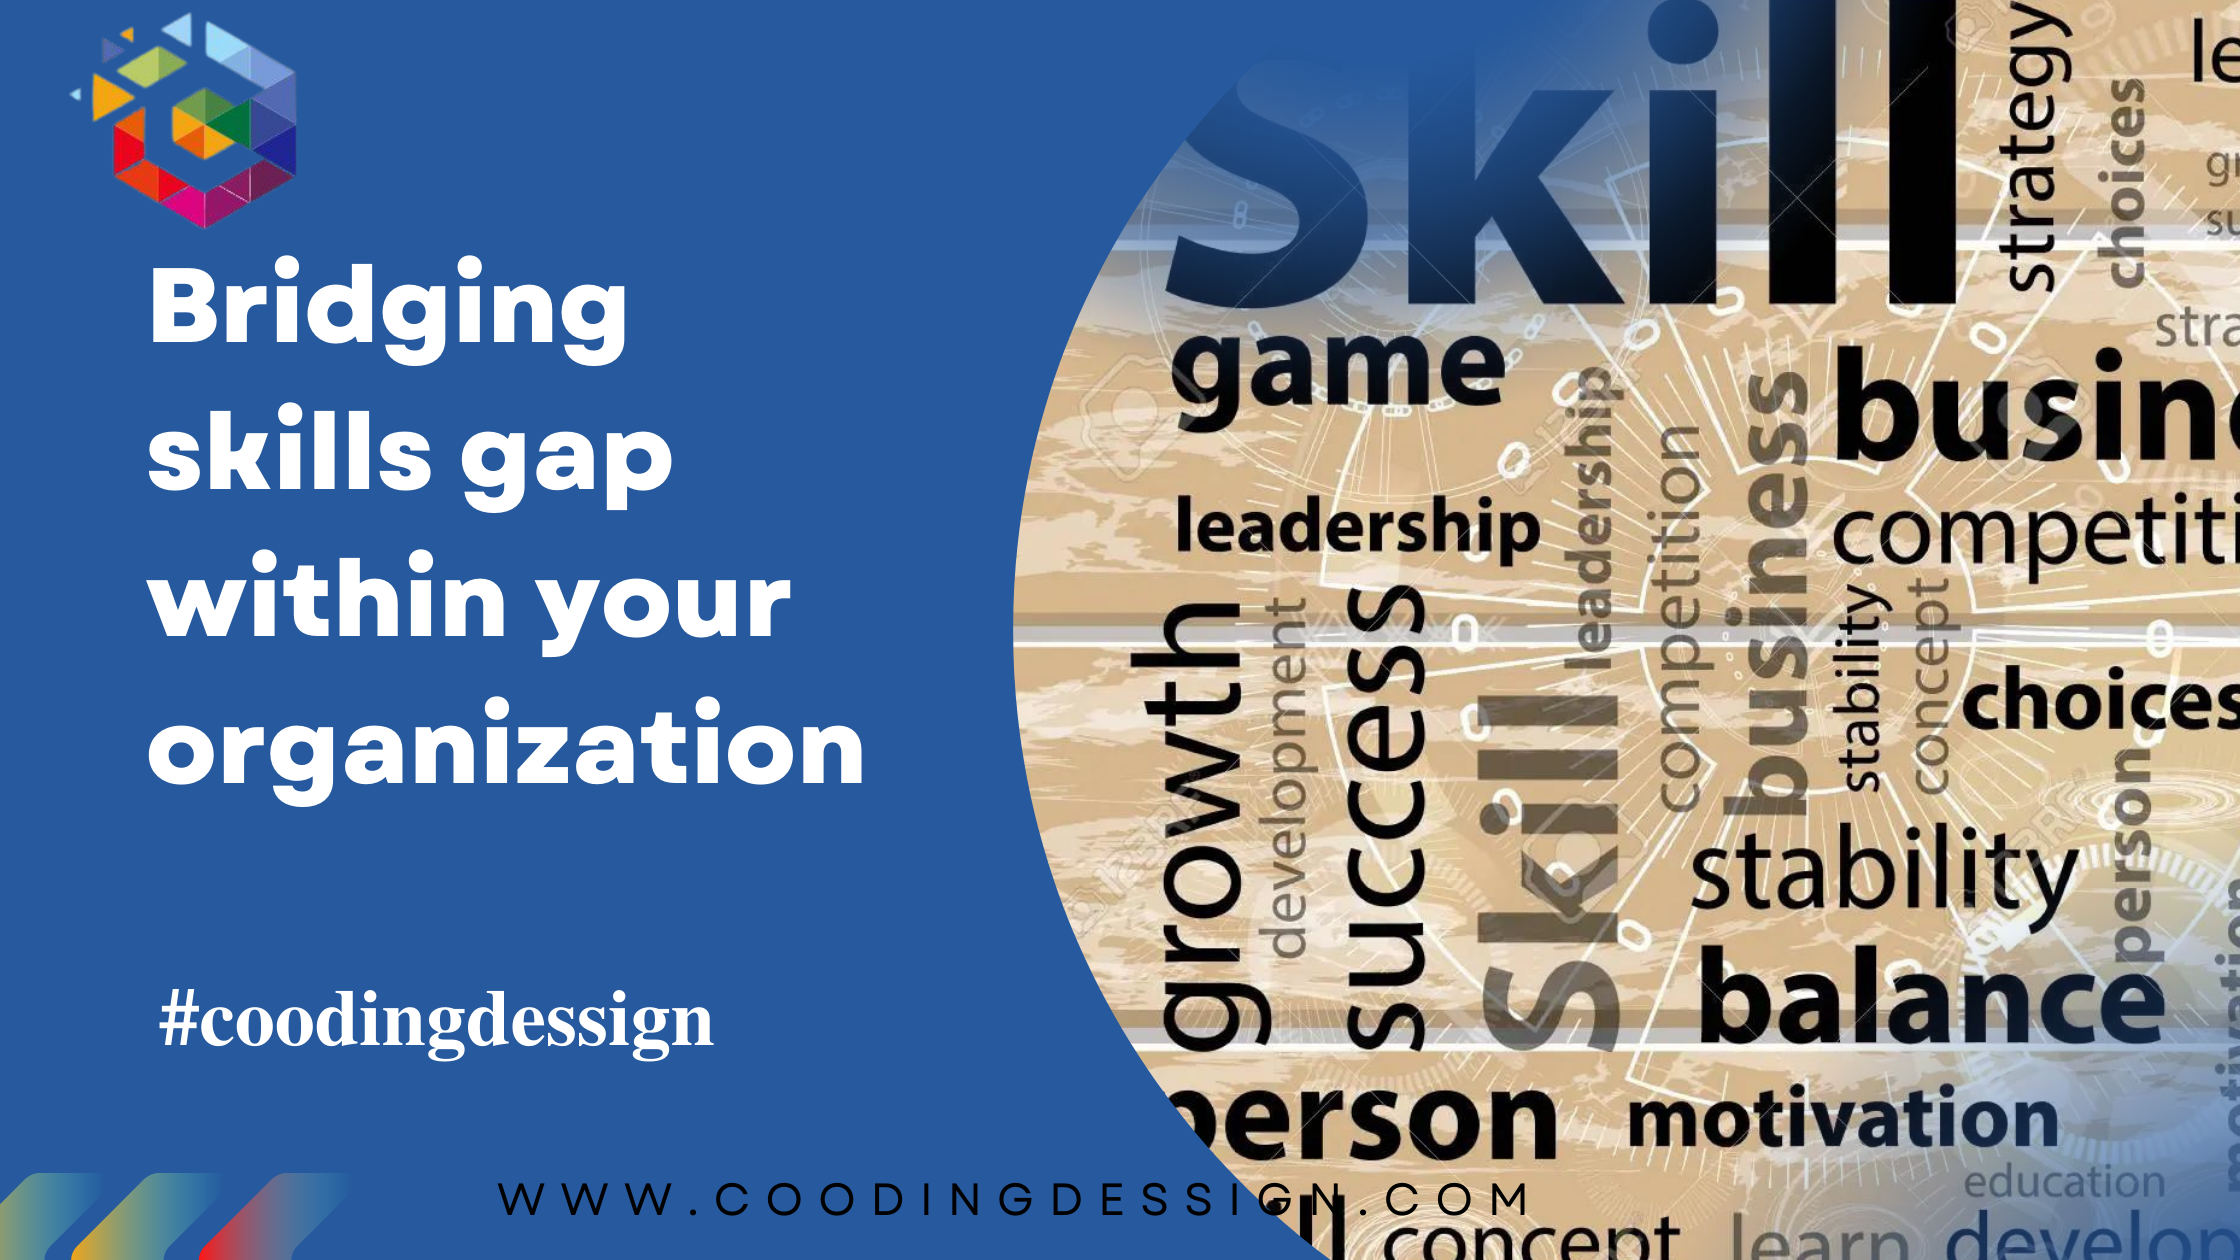 Skills gap bridging the within your organization